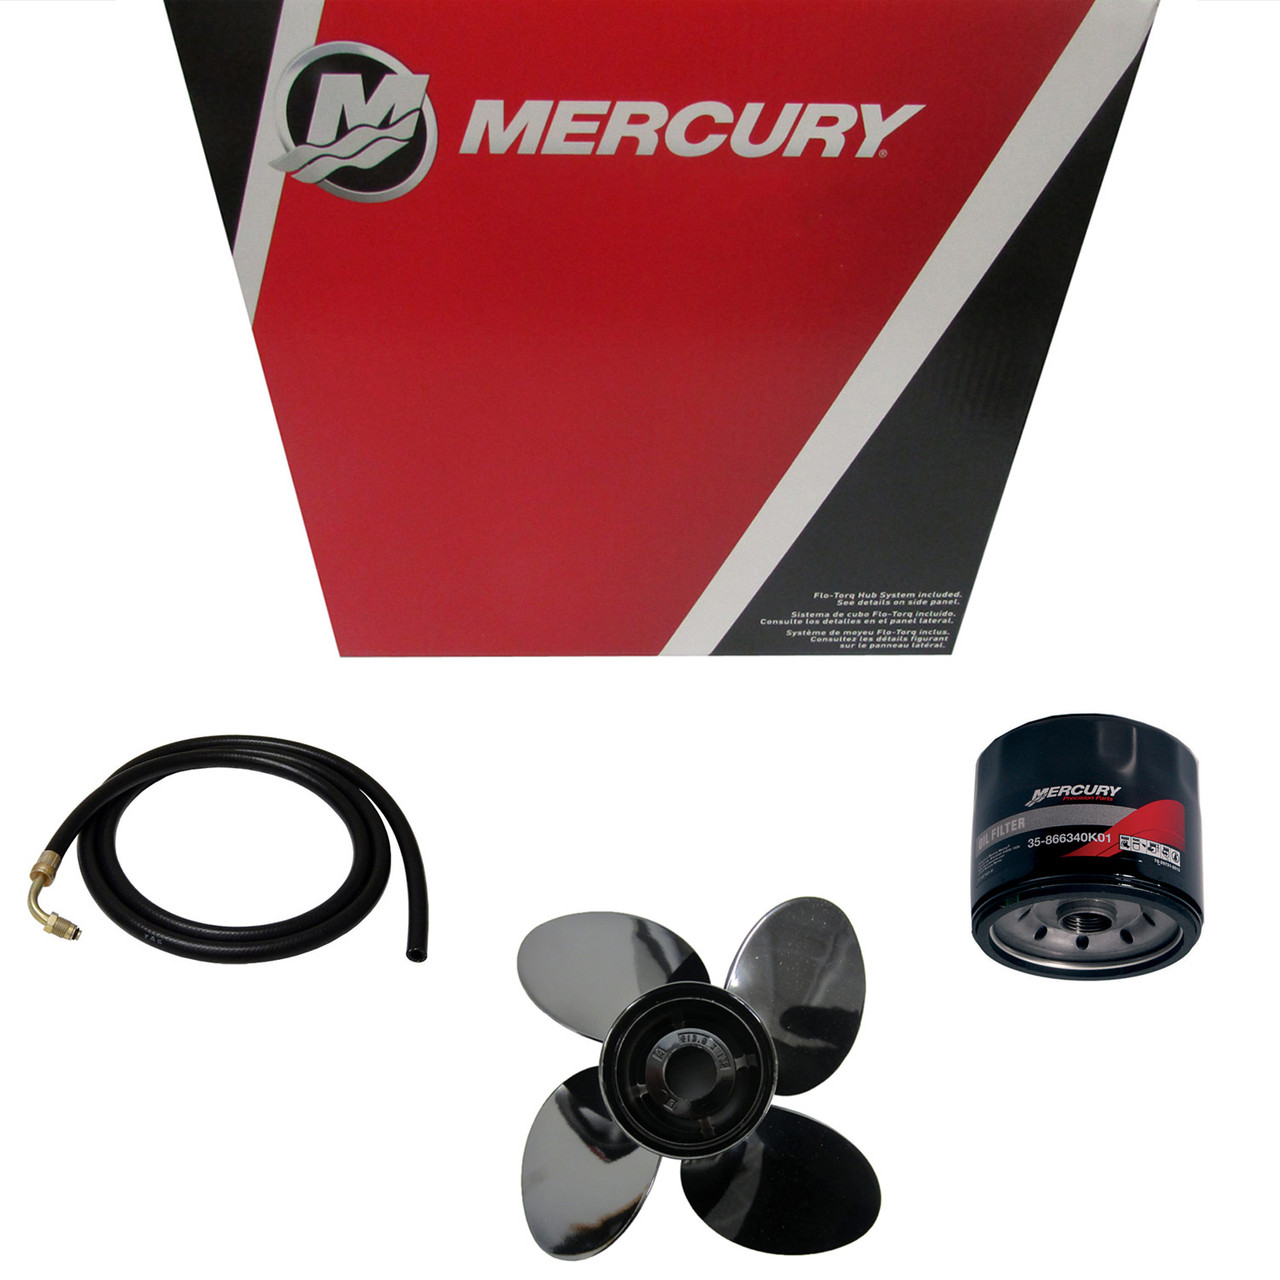 Mercury Marine / Mercruiser New OEM Hose Assembly, 32-861590A05